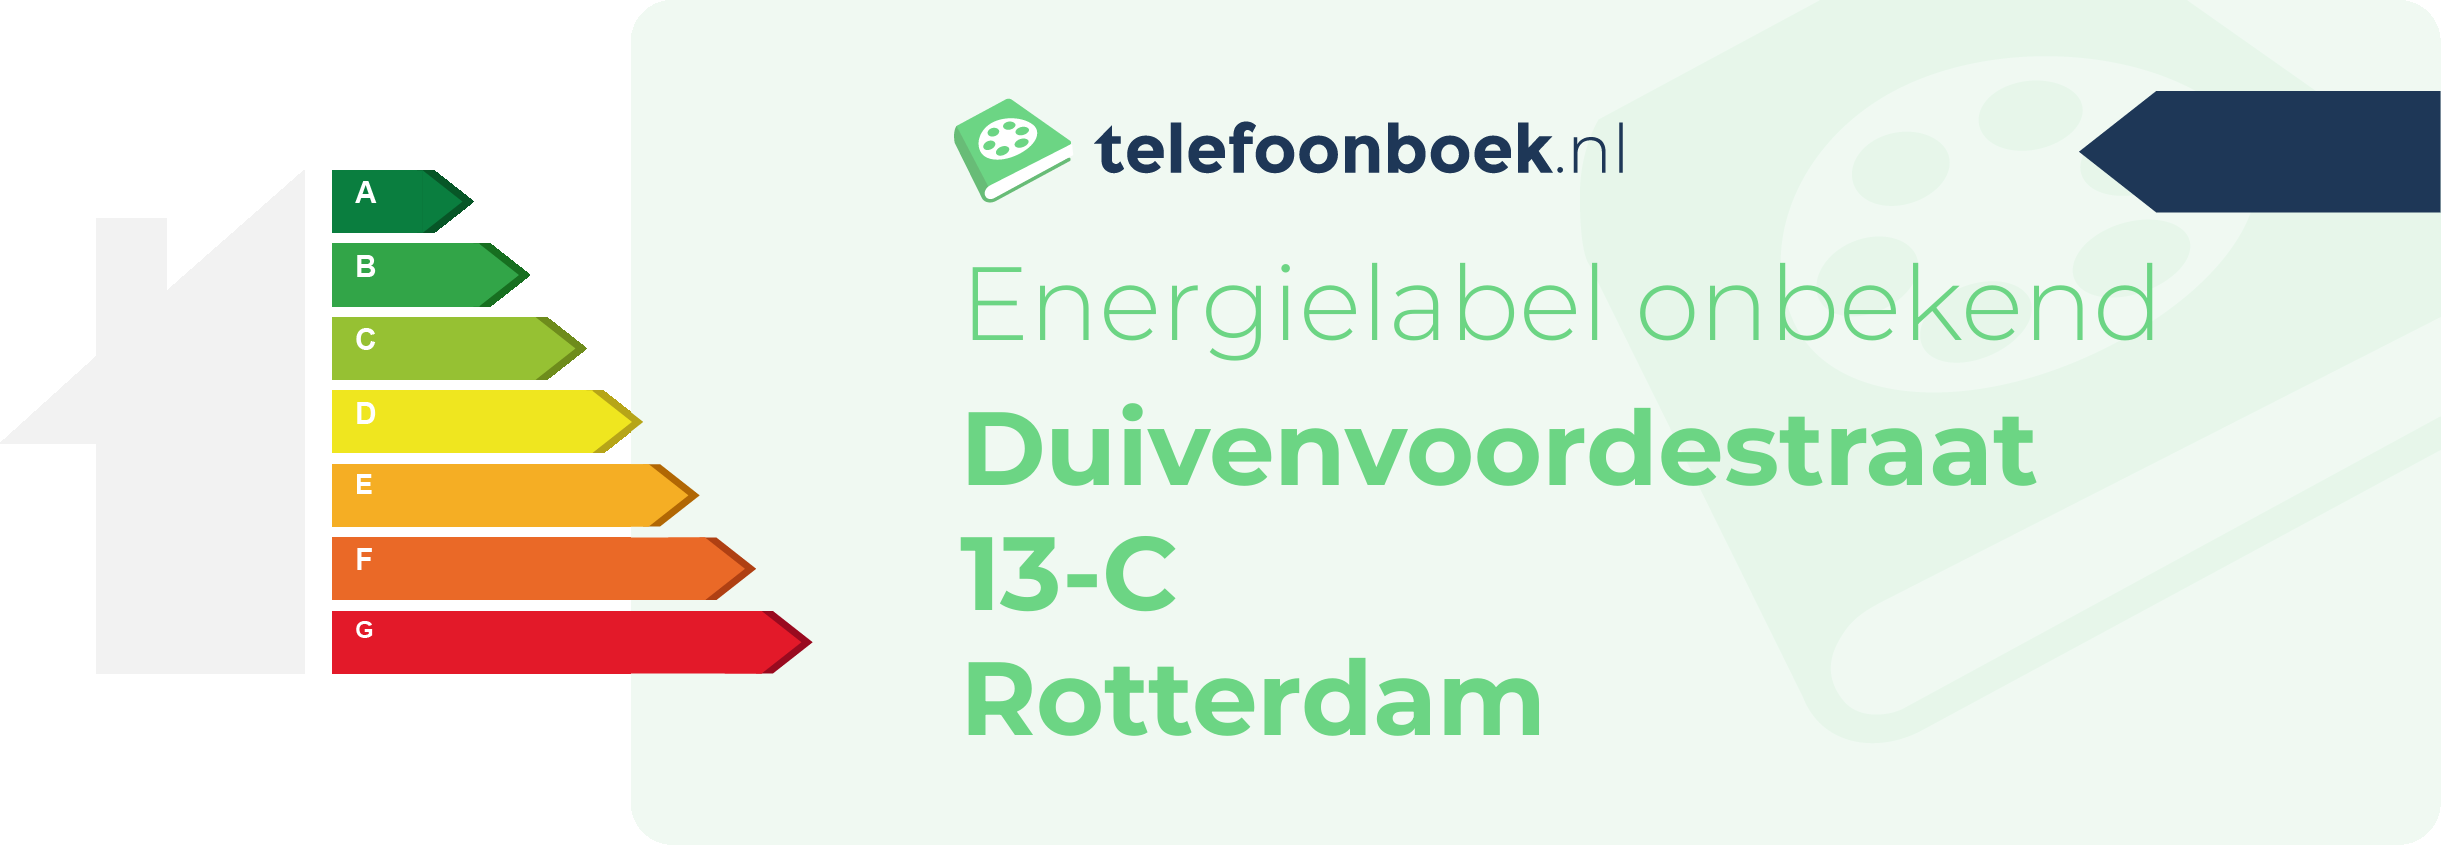 Energielabel Duivenvoordestraat 13-C Rotterdam